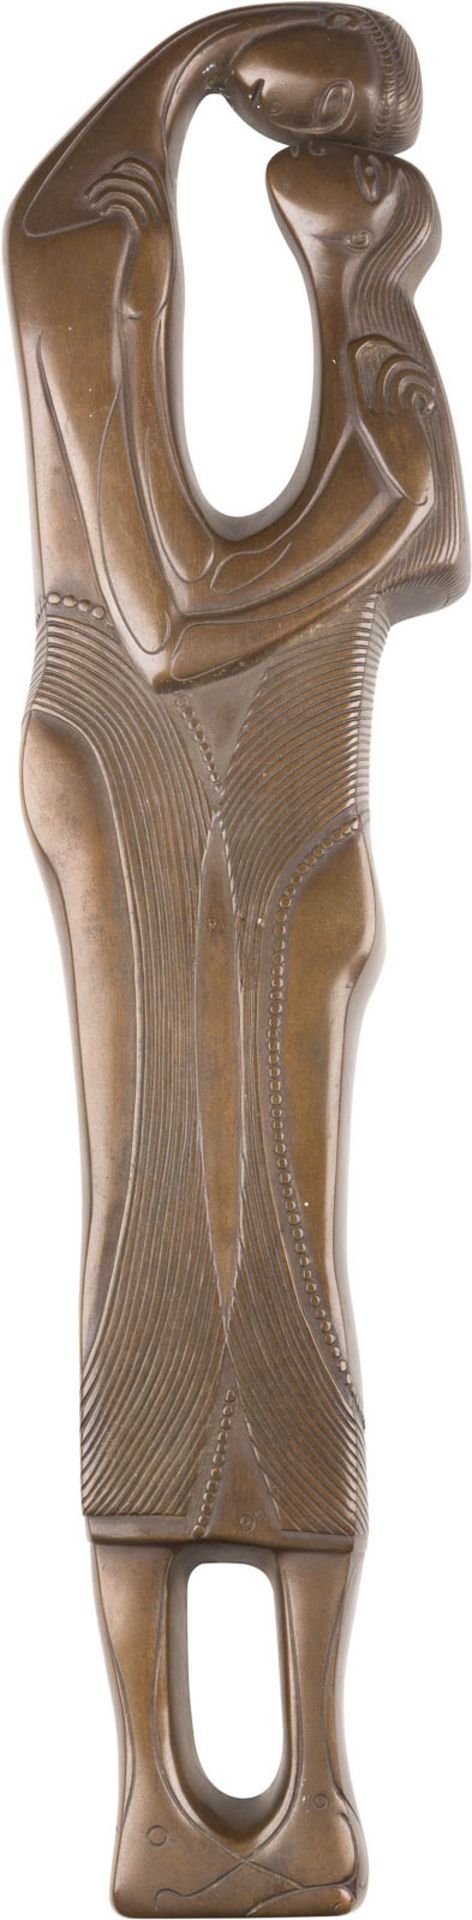 GERTRUD KORTENBACH1924 Solingen - 1960 ebendaDAS PAAR Bronze, braun patiniert. 38,5 x 9 x 2 cm.